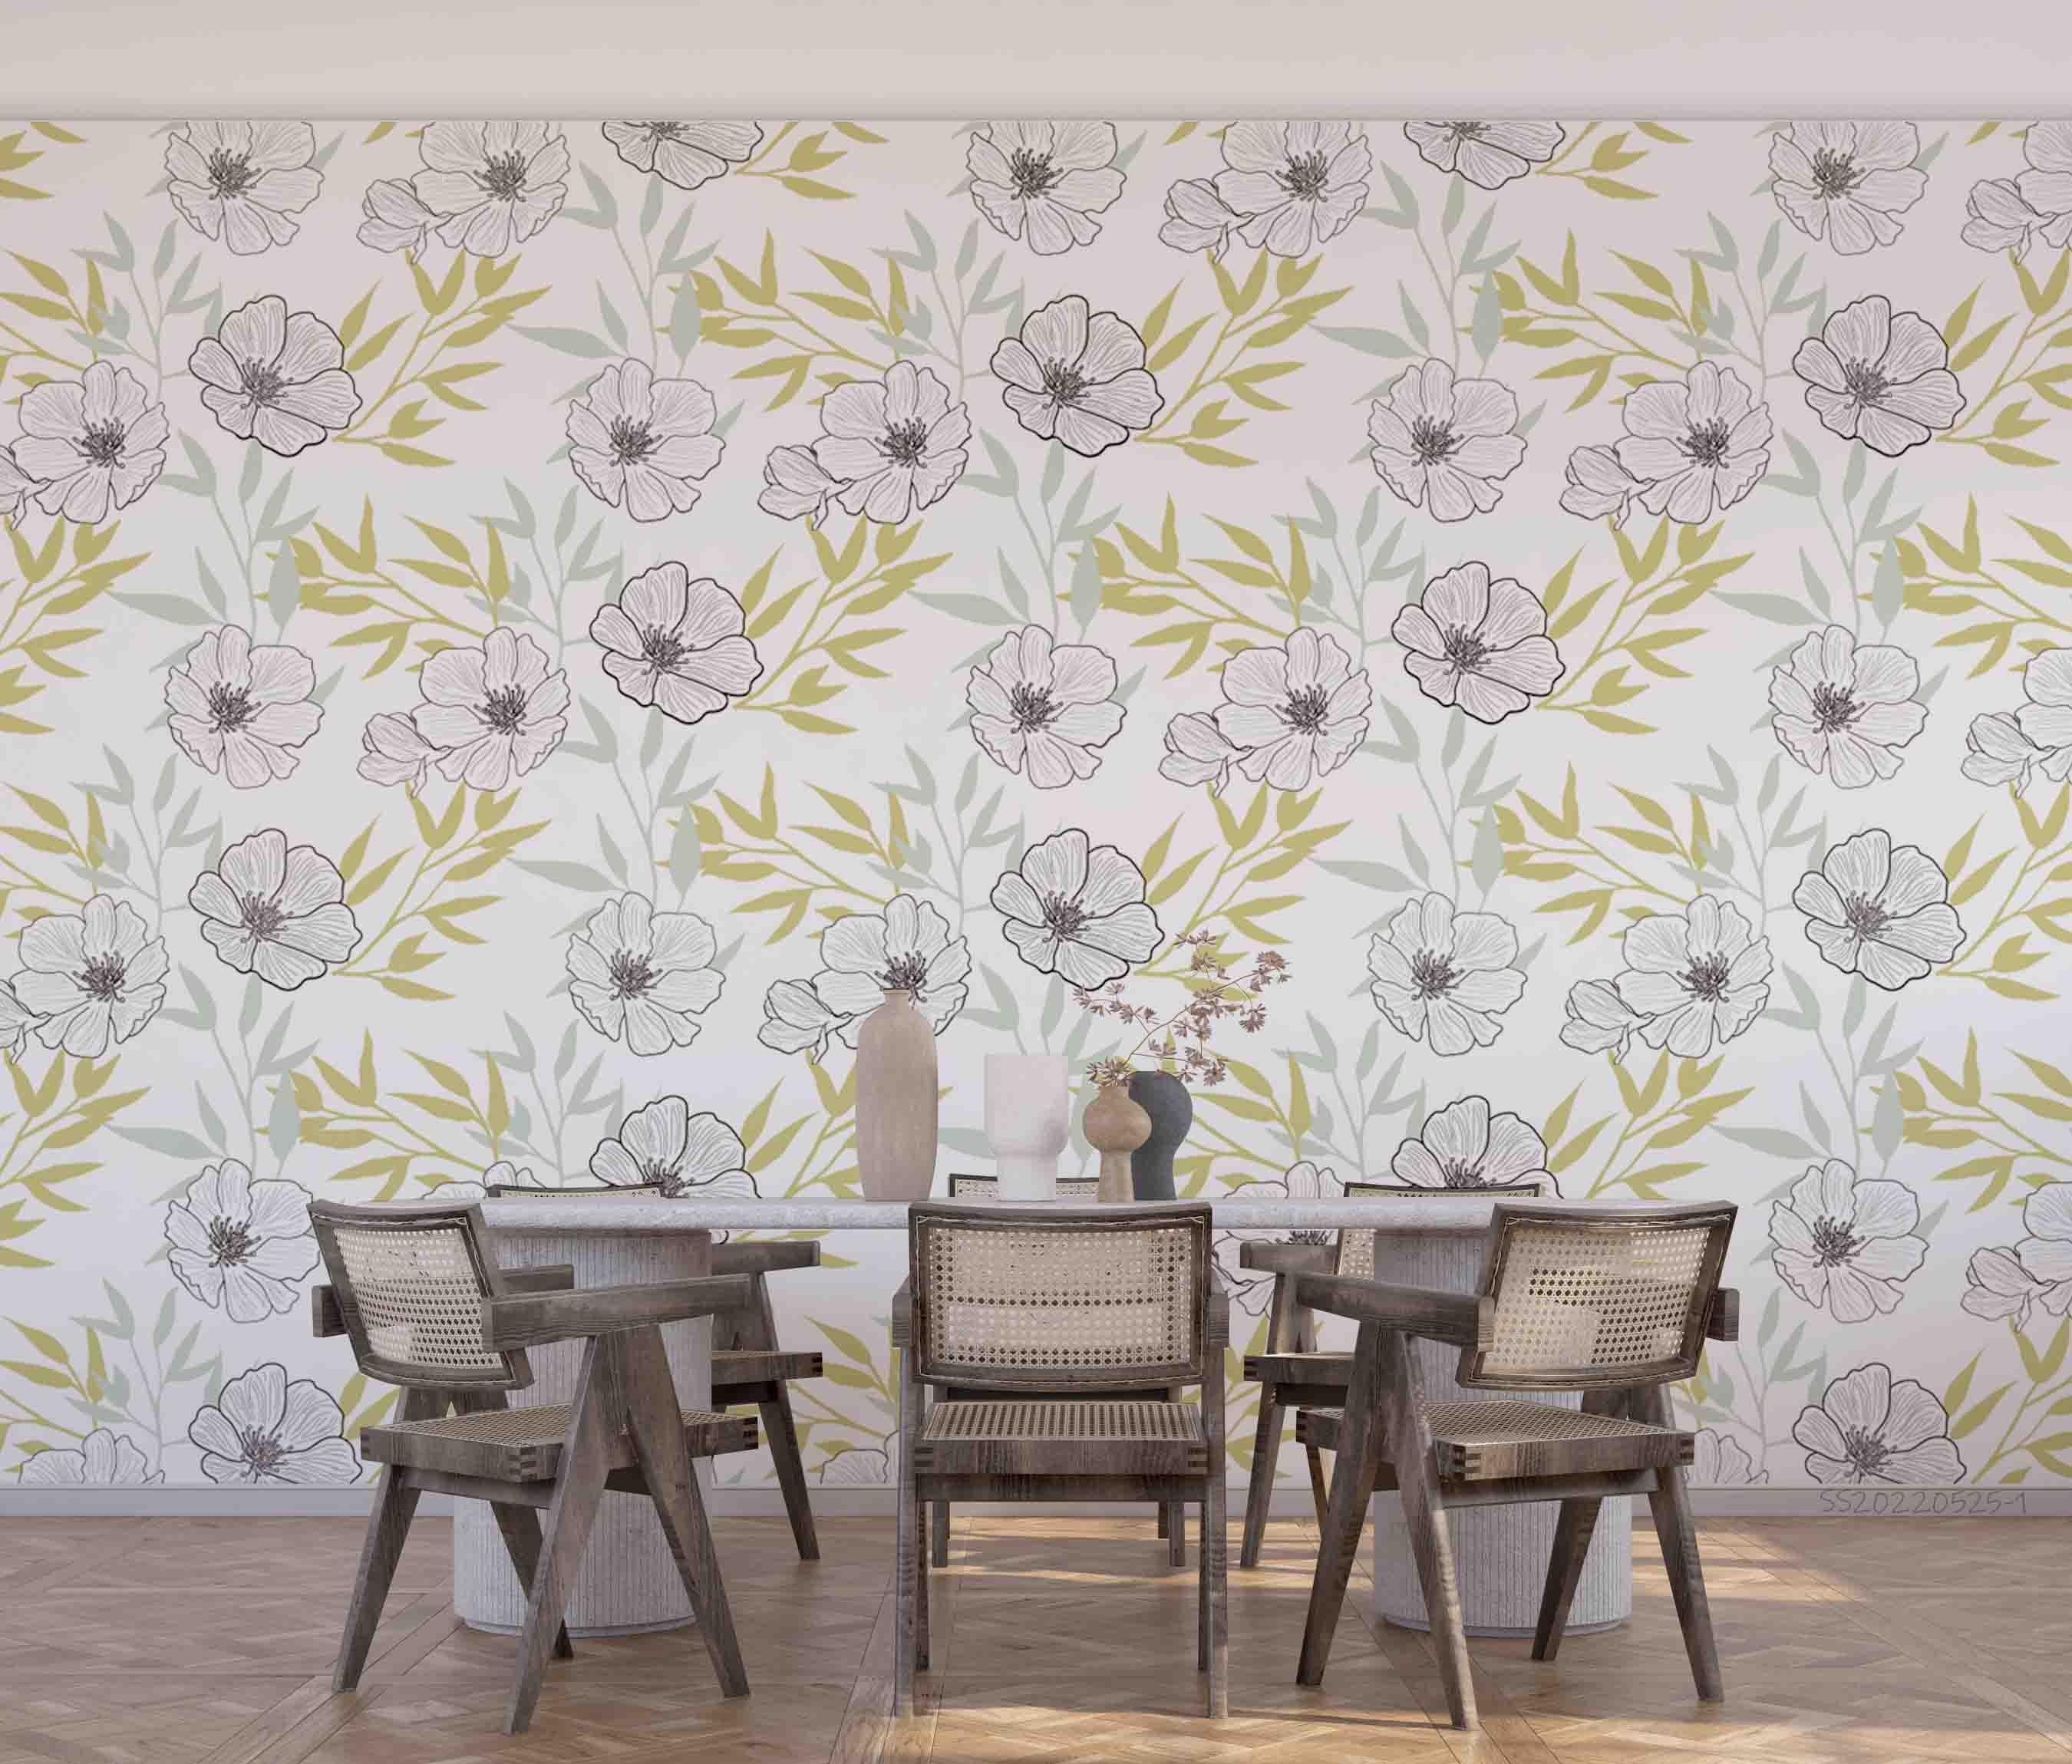 3D Vintage Botanical Floral Leaves Wall Mural Wallpaper GD 4721- Jess Art Decoration